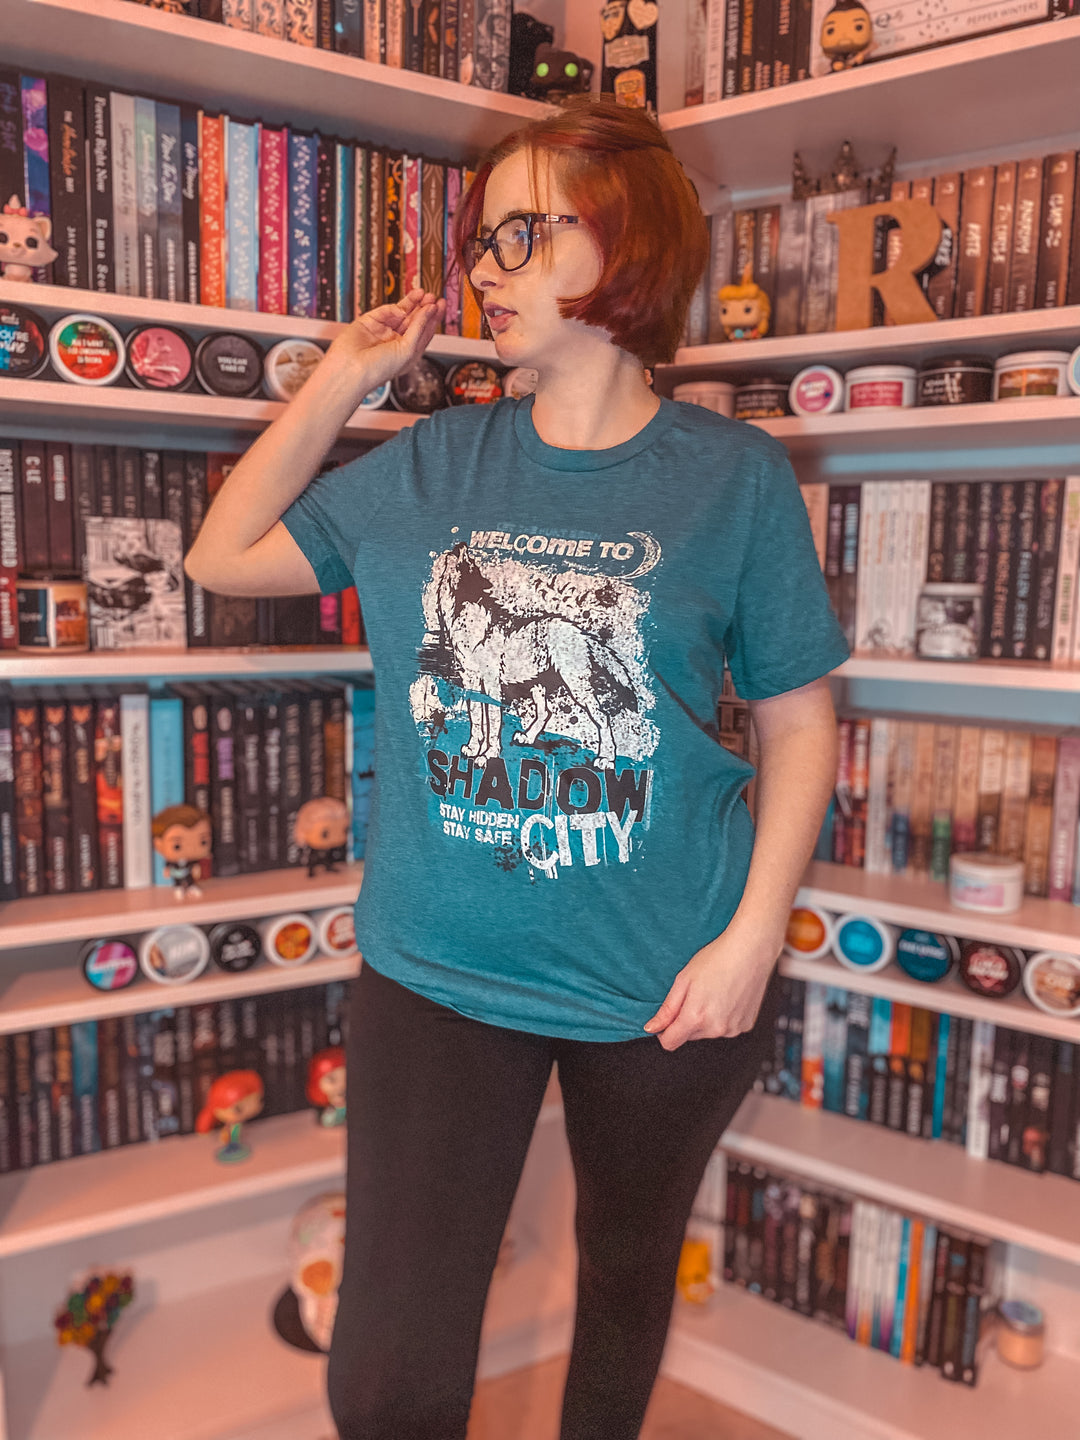 Jen L Grey- Camiseta unisex de Shadow City